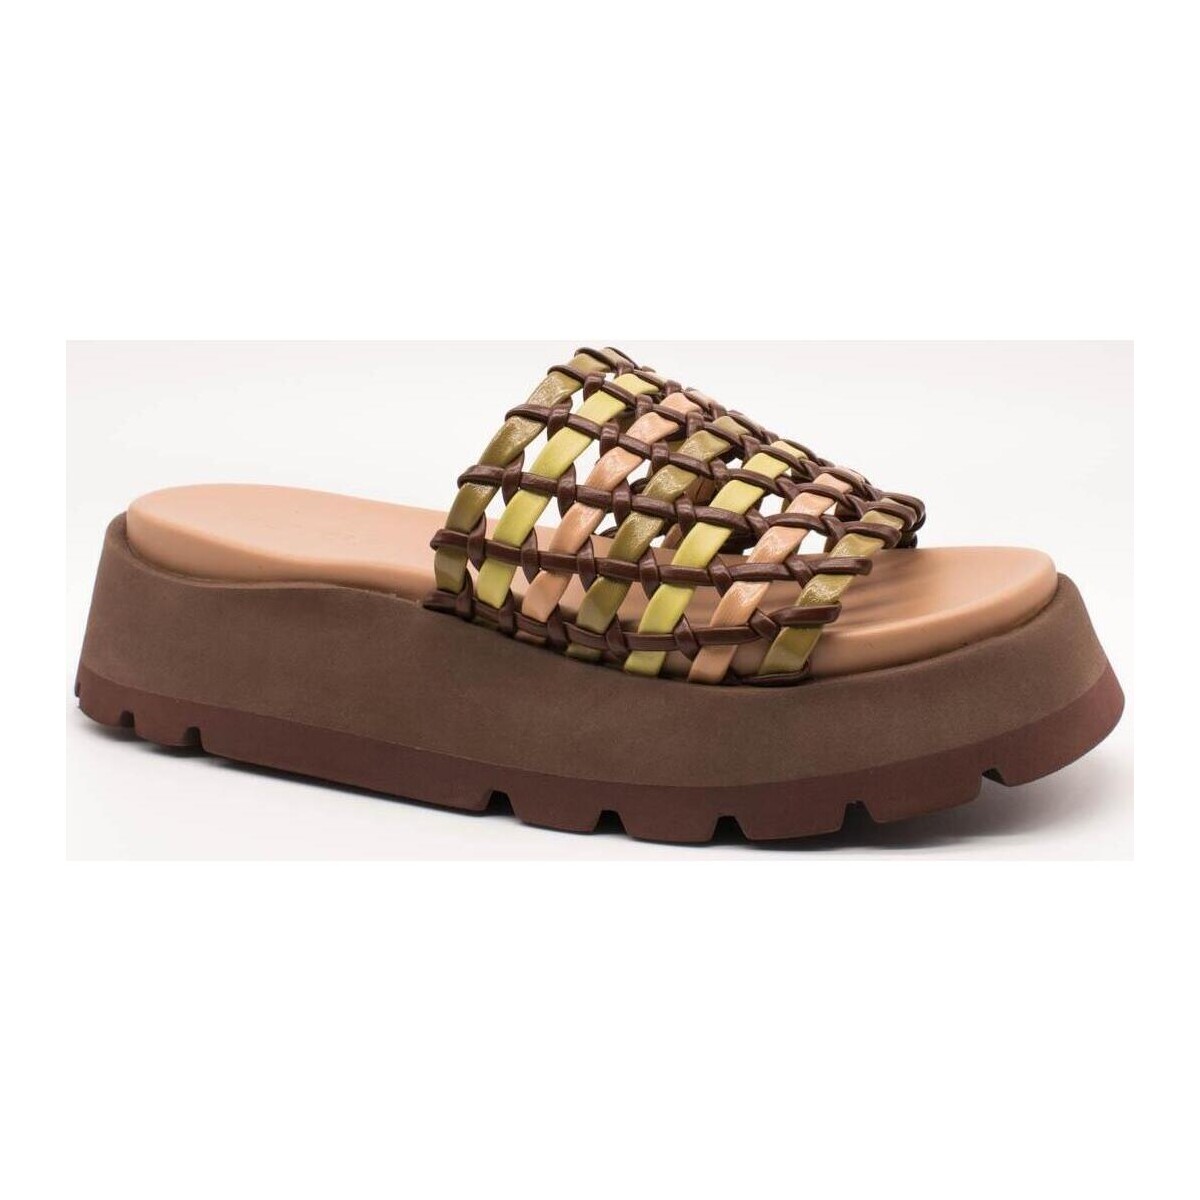 Zapatos Mujer Sandalias Noa Harmon 9720-Multi Marrón Marrón